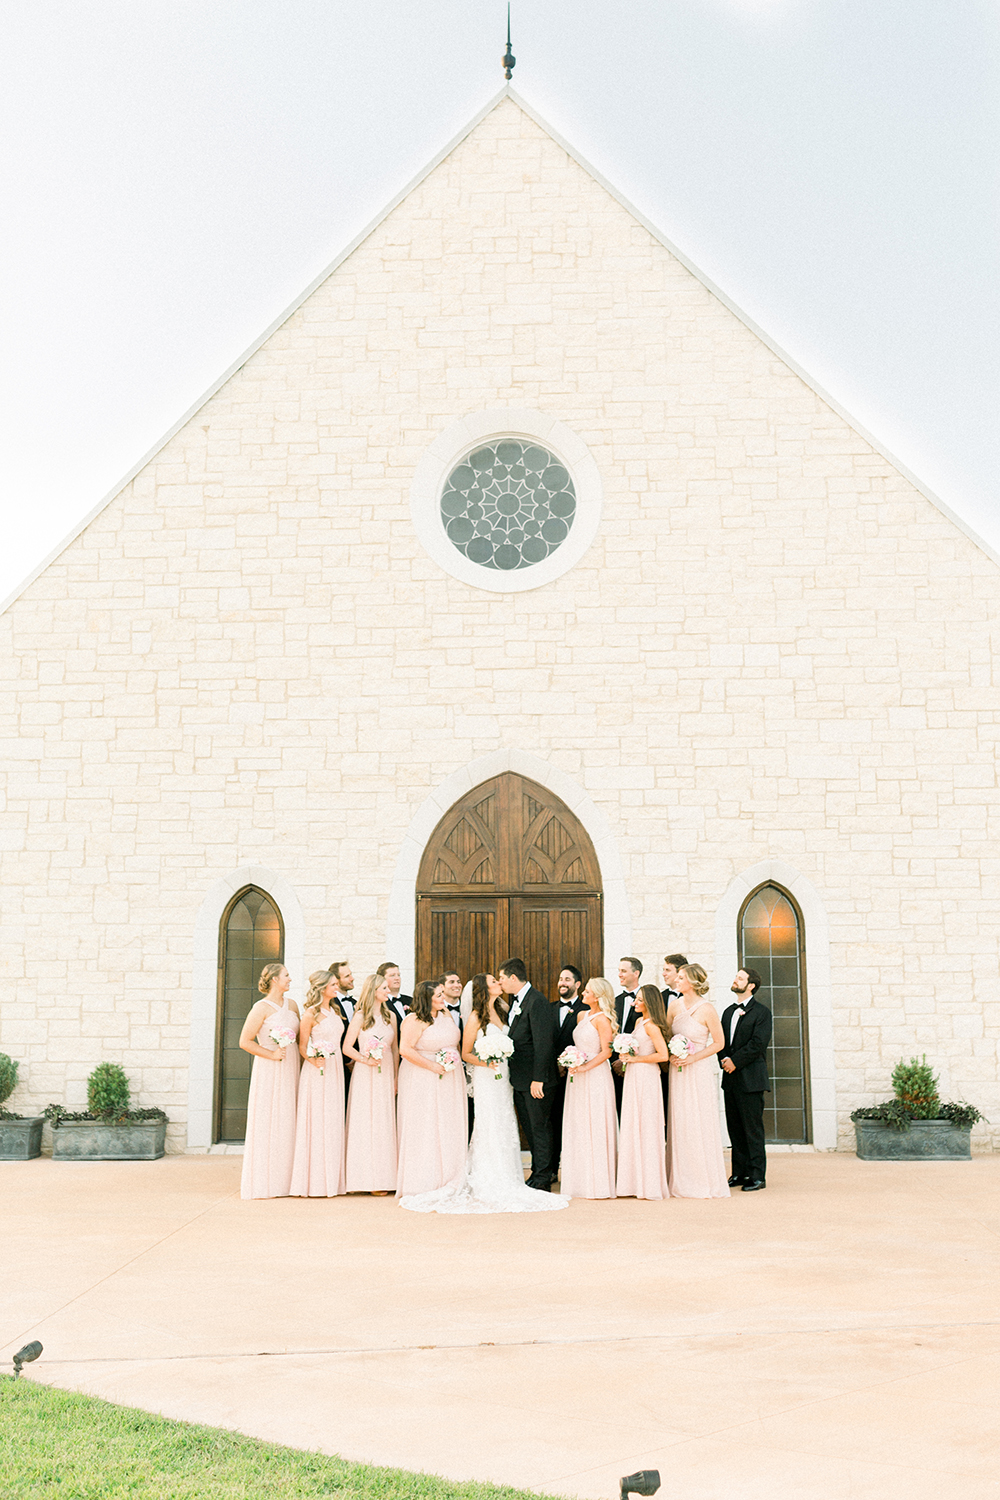 houston wedding venue - wedding party photography - blush bridesmaids dresses